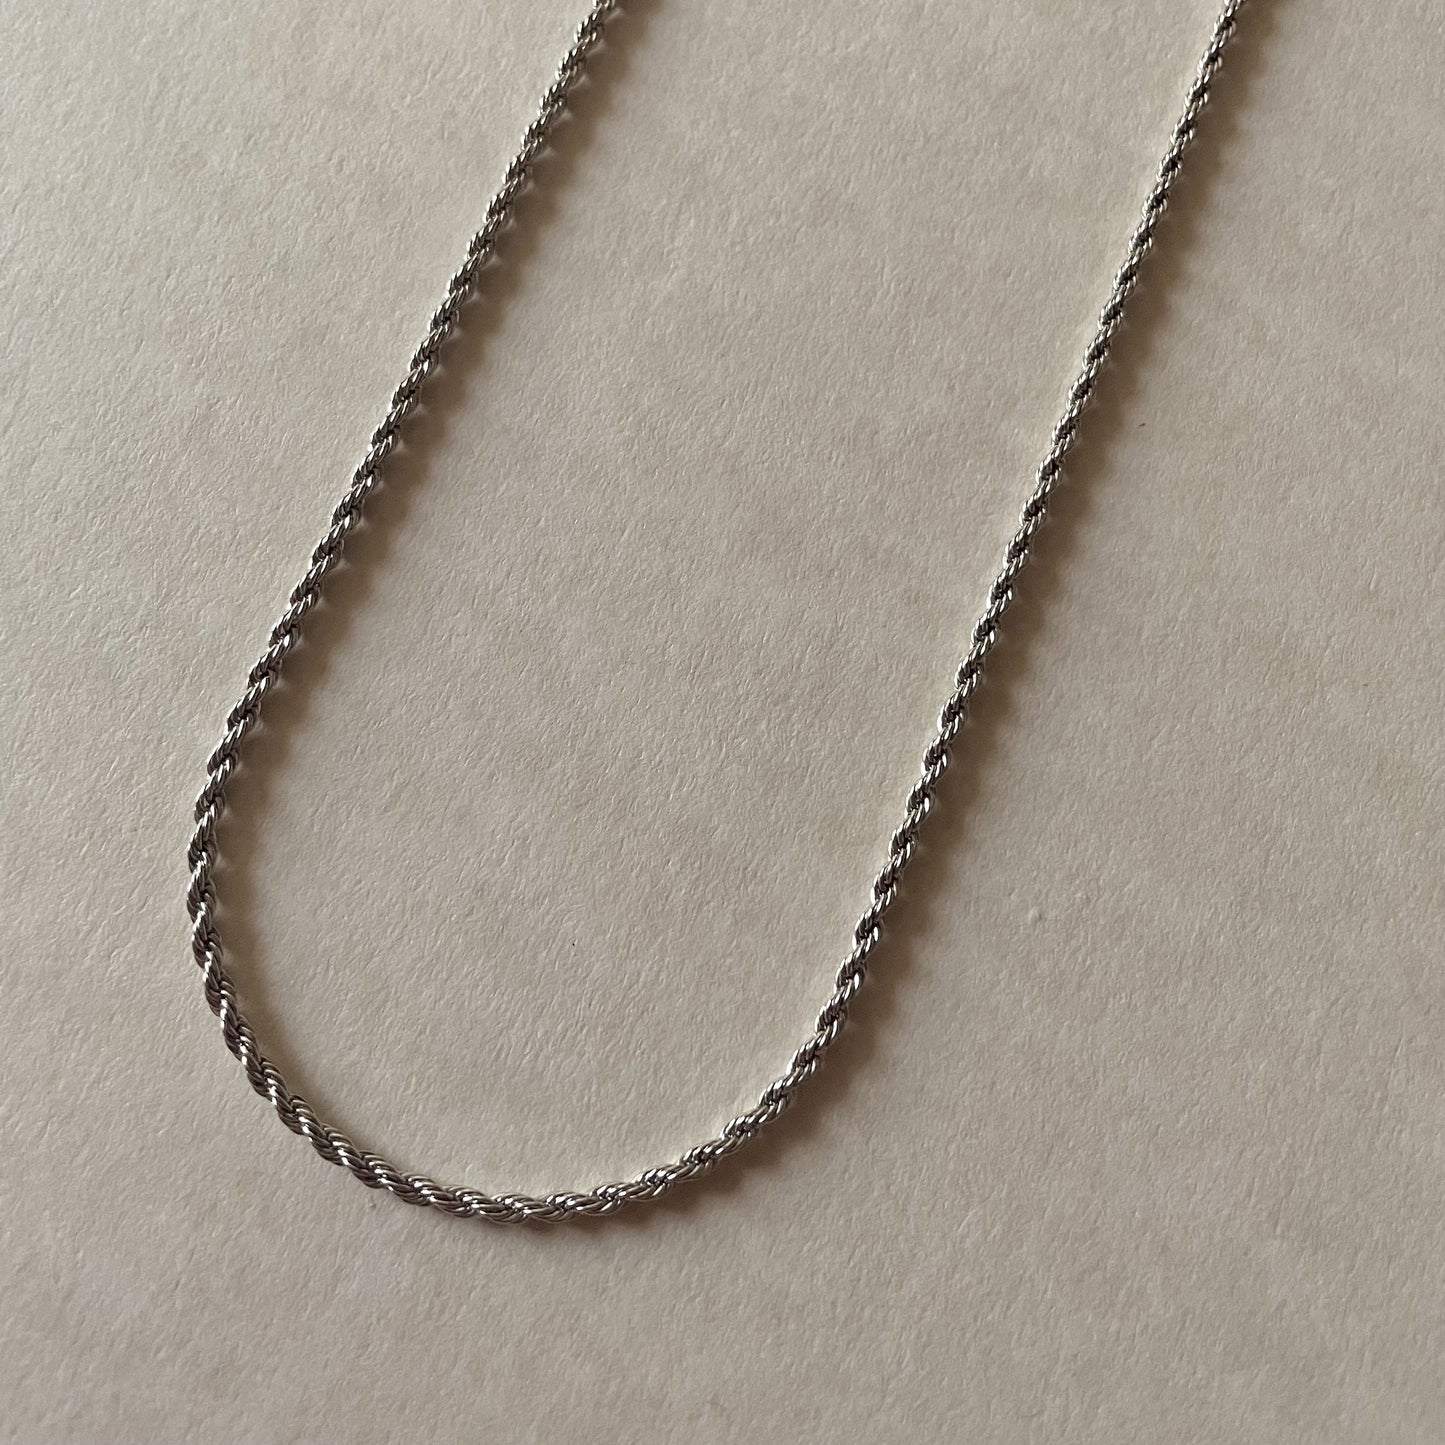 Slim Corde Necklace - Silver - Namaste Jewelry Canada